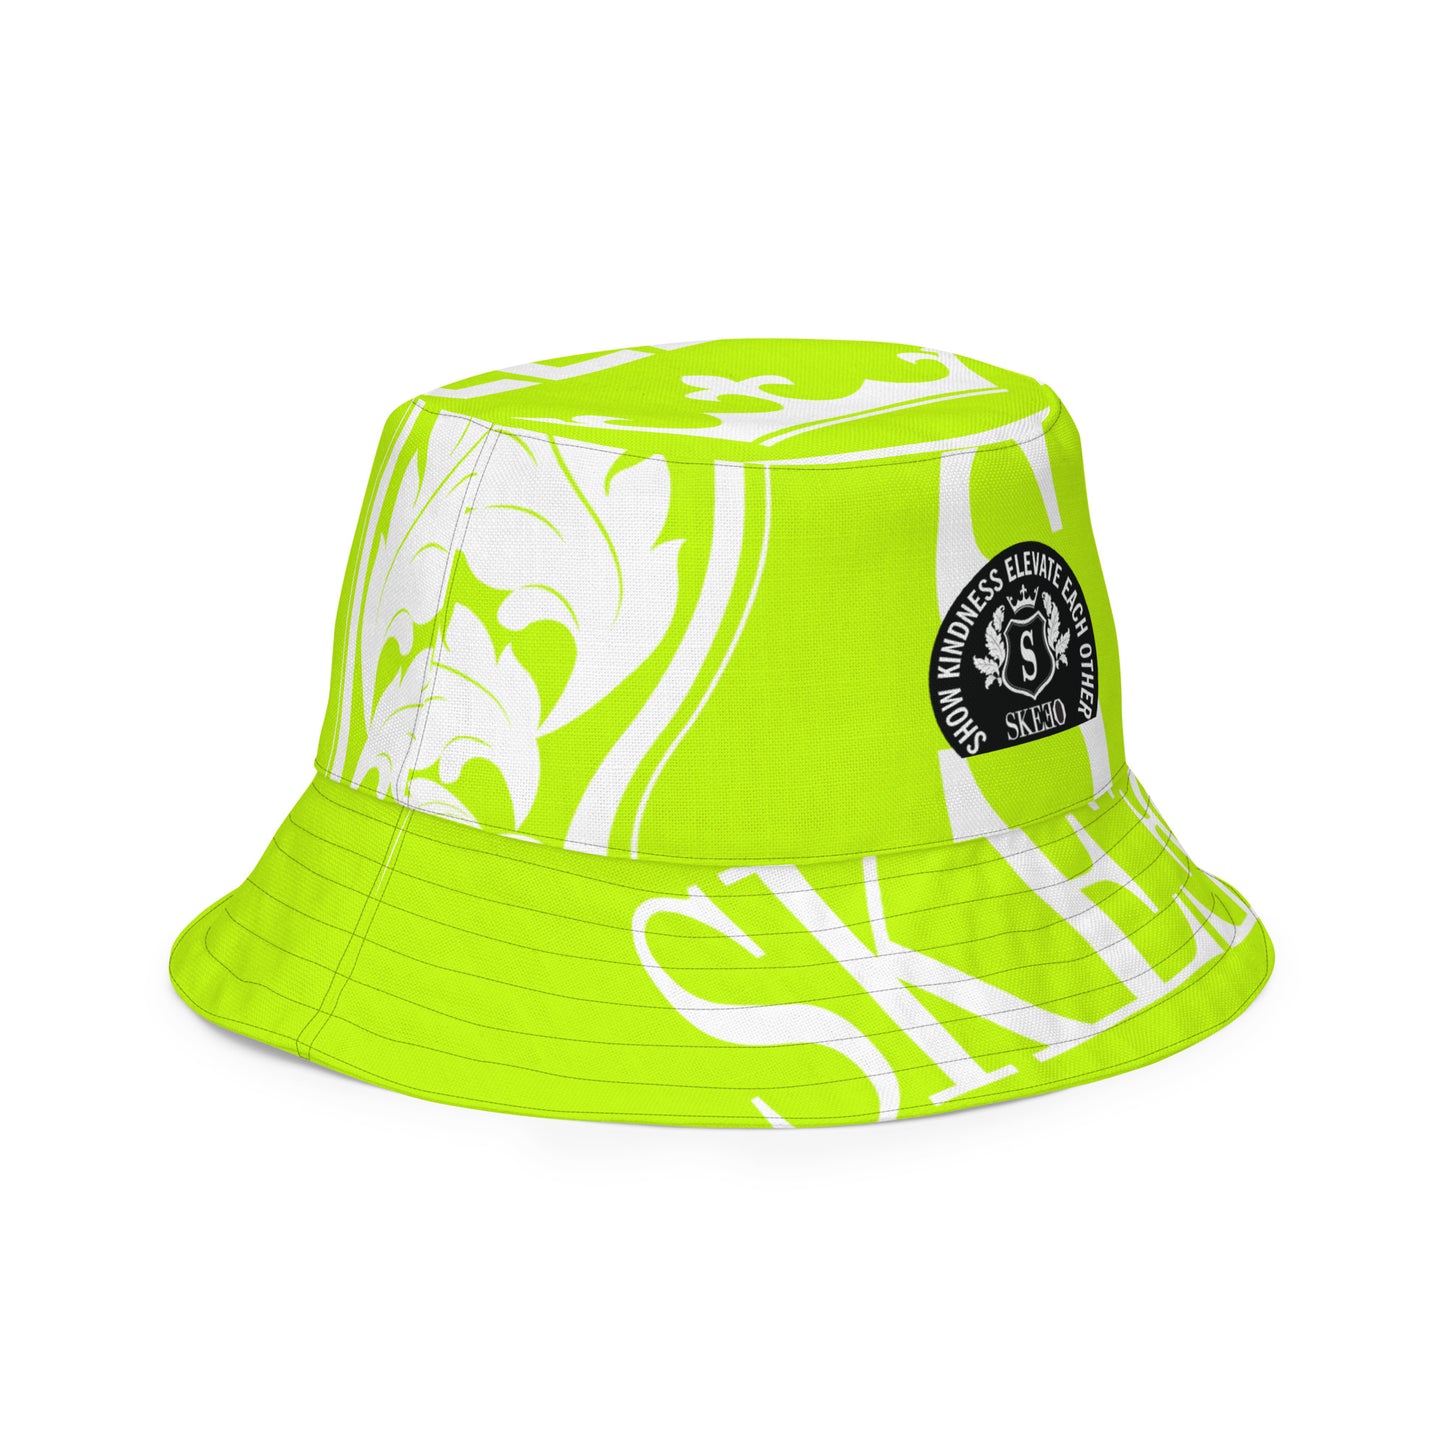 A SK HighLighter Reversible bucket hat